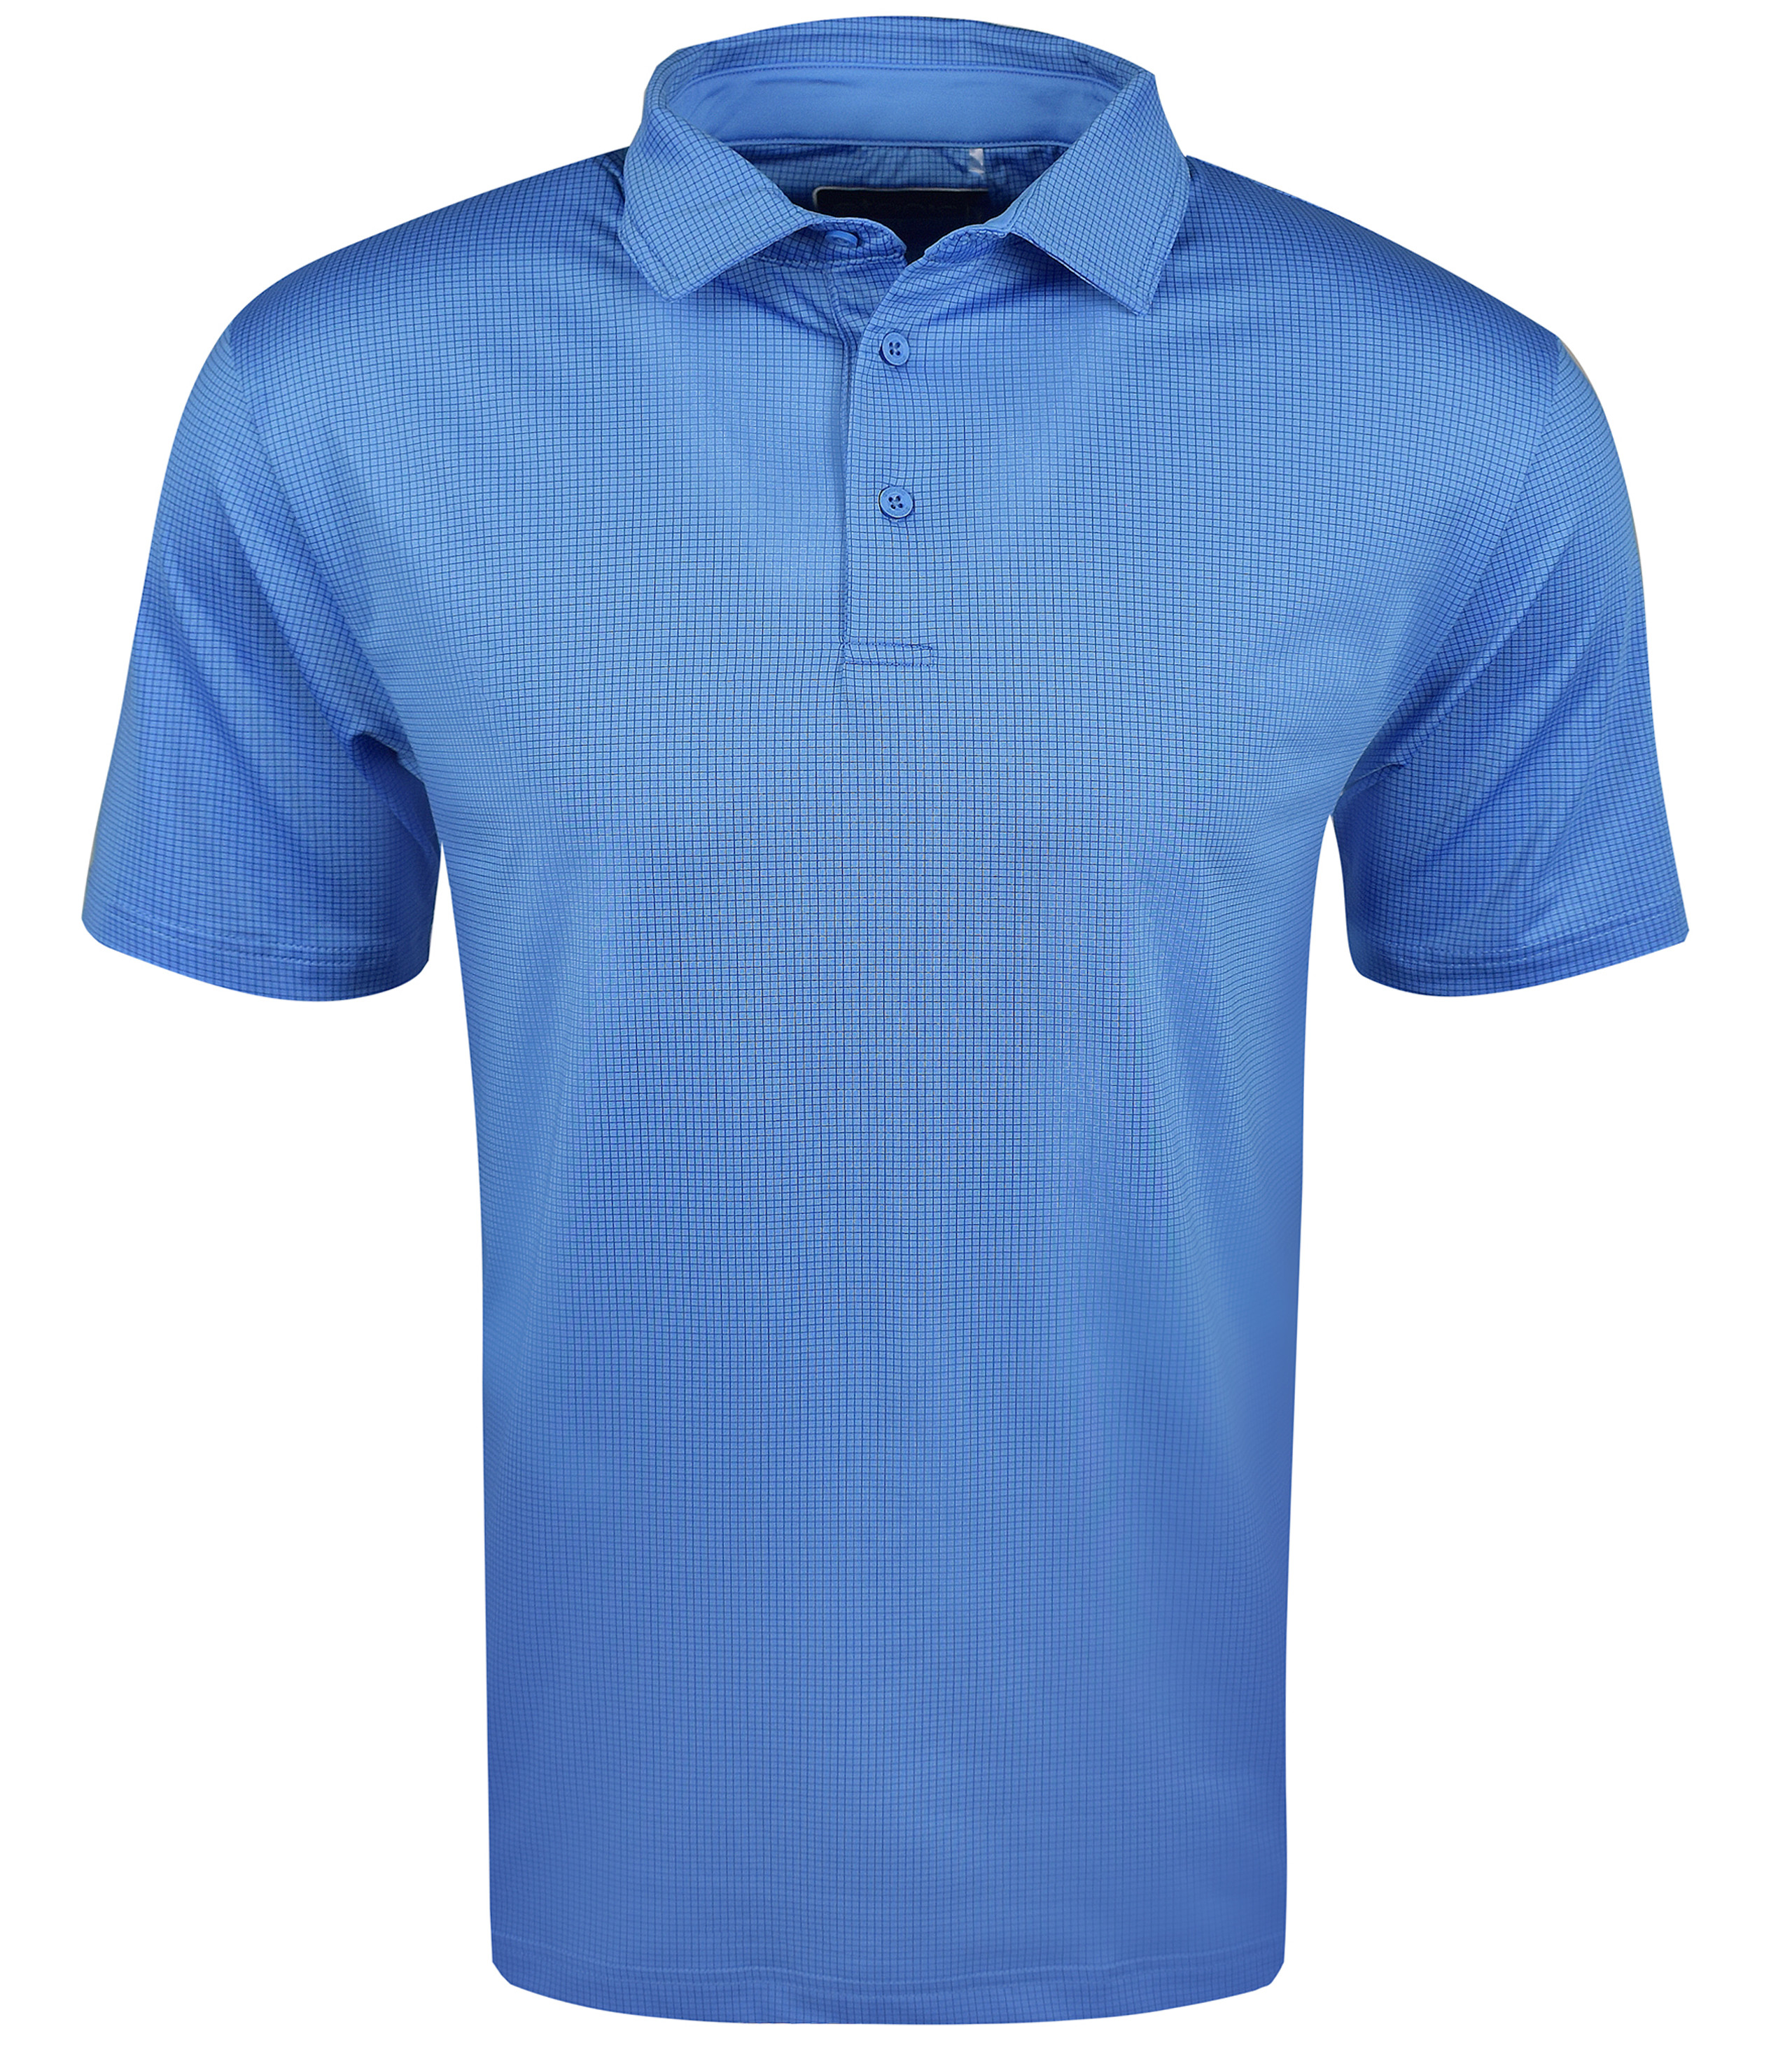 Etonic Golf Gingham Print Polo Shirt | RockBottomGolf.com